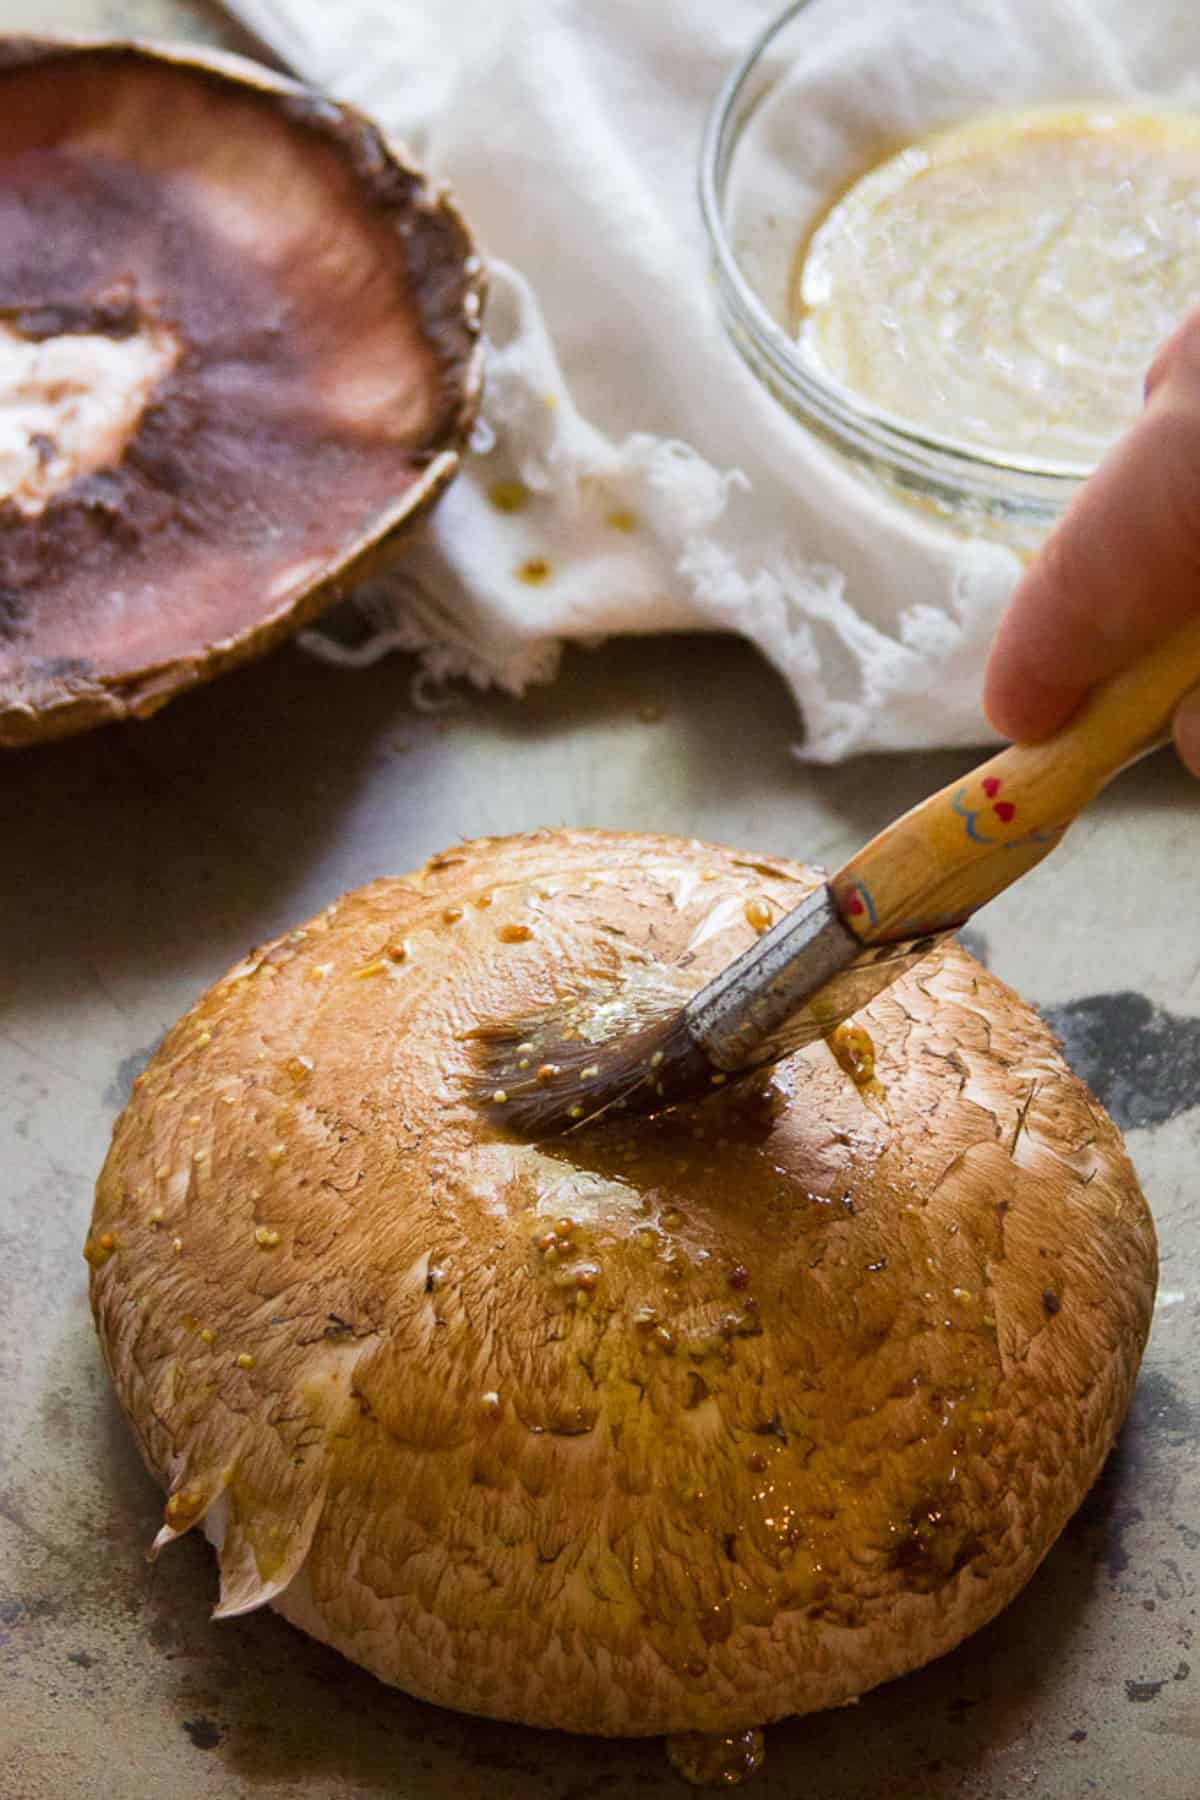 Sauce being brushed on a portobello mushroom cap.